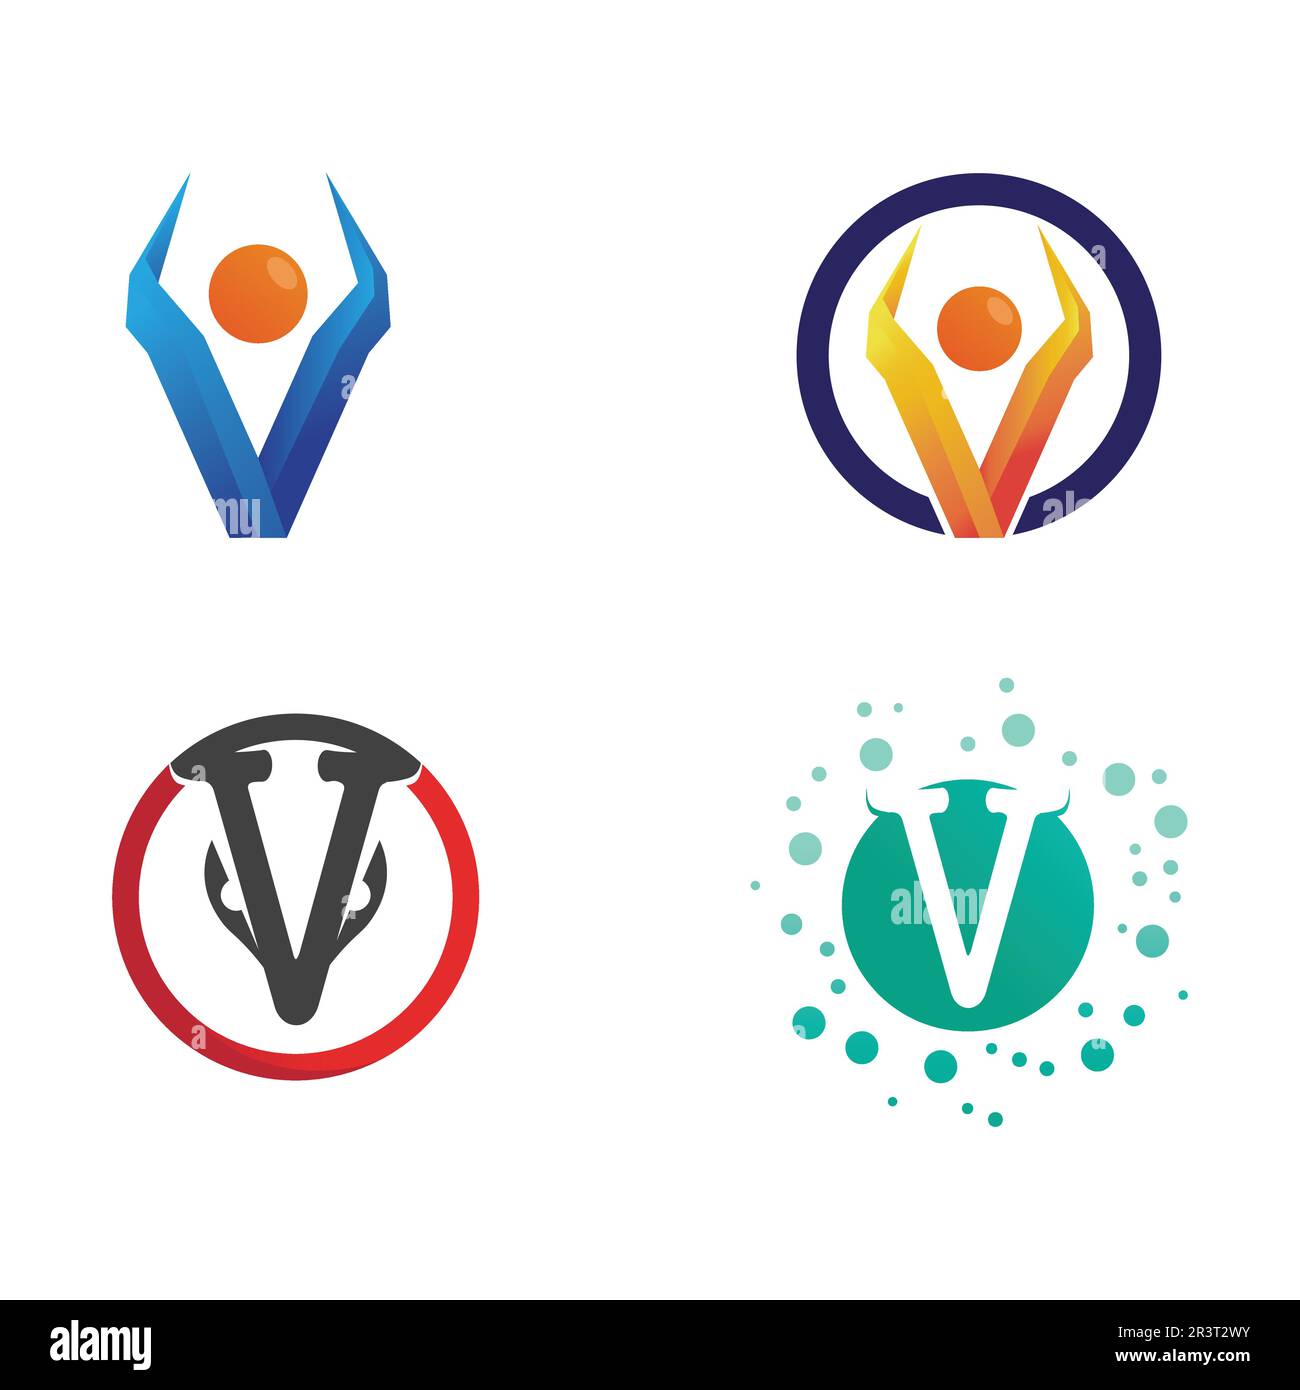 V Schreiben Logo Vorlage Vektor icon Abbildung Stock Vektor